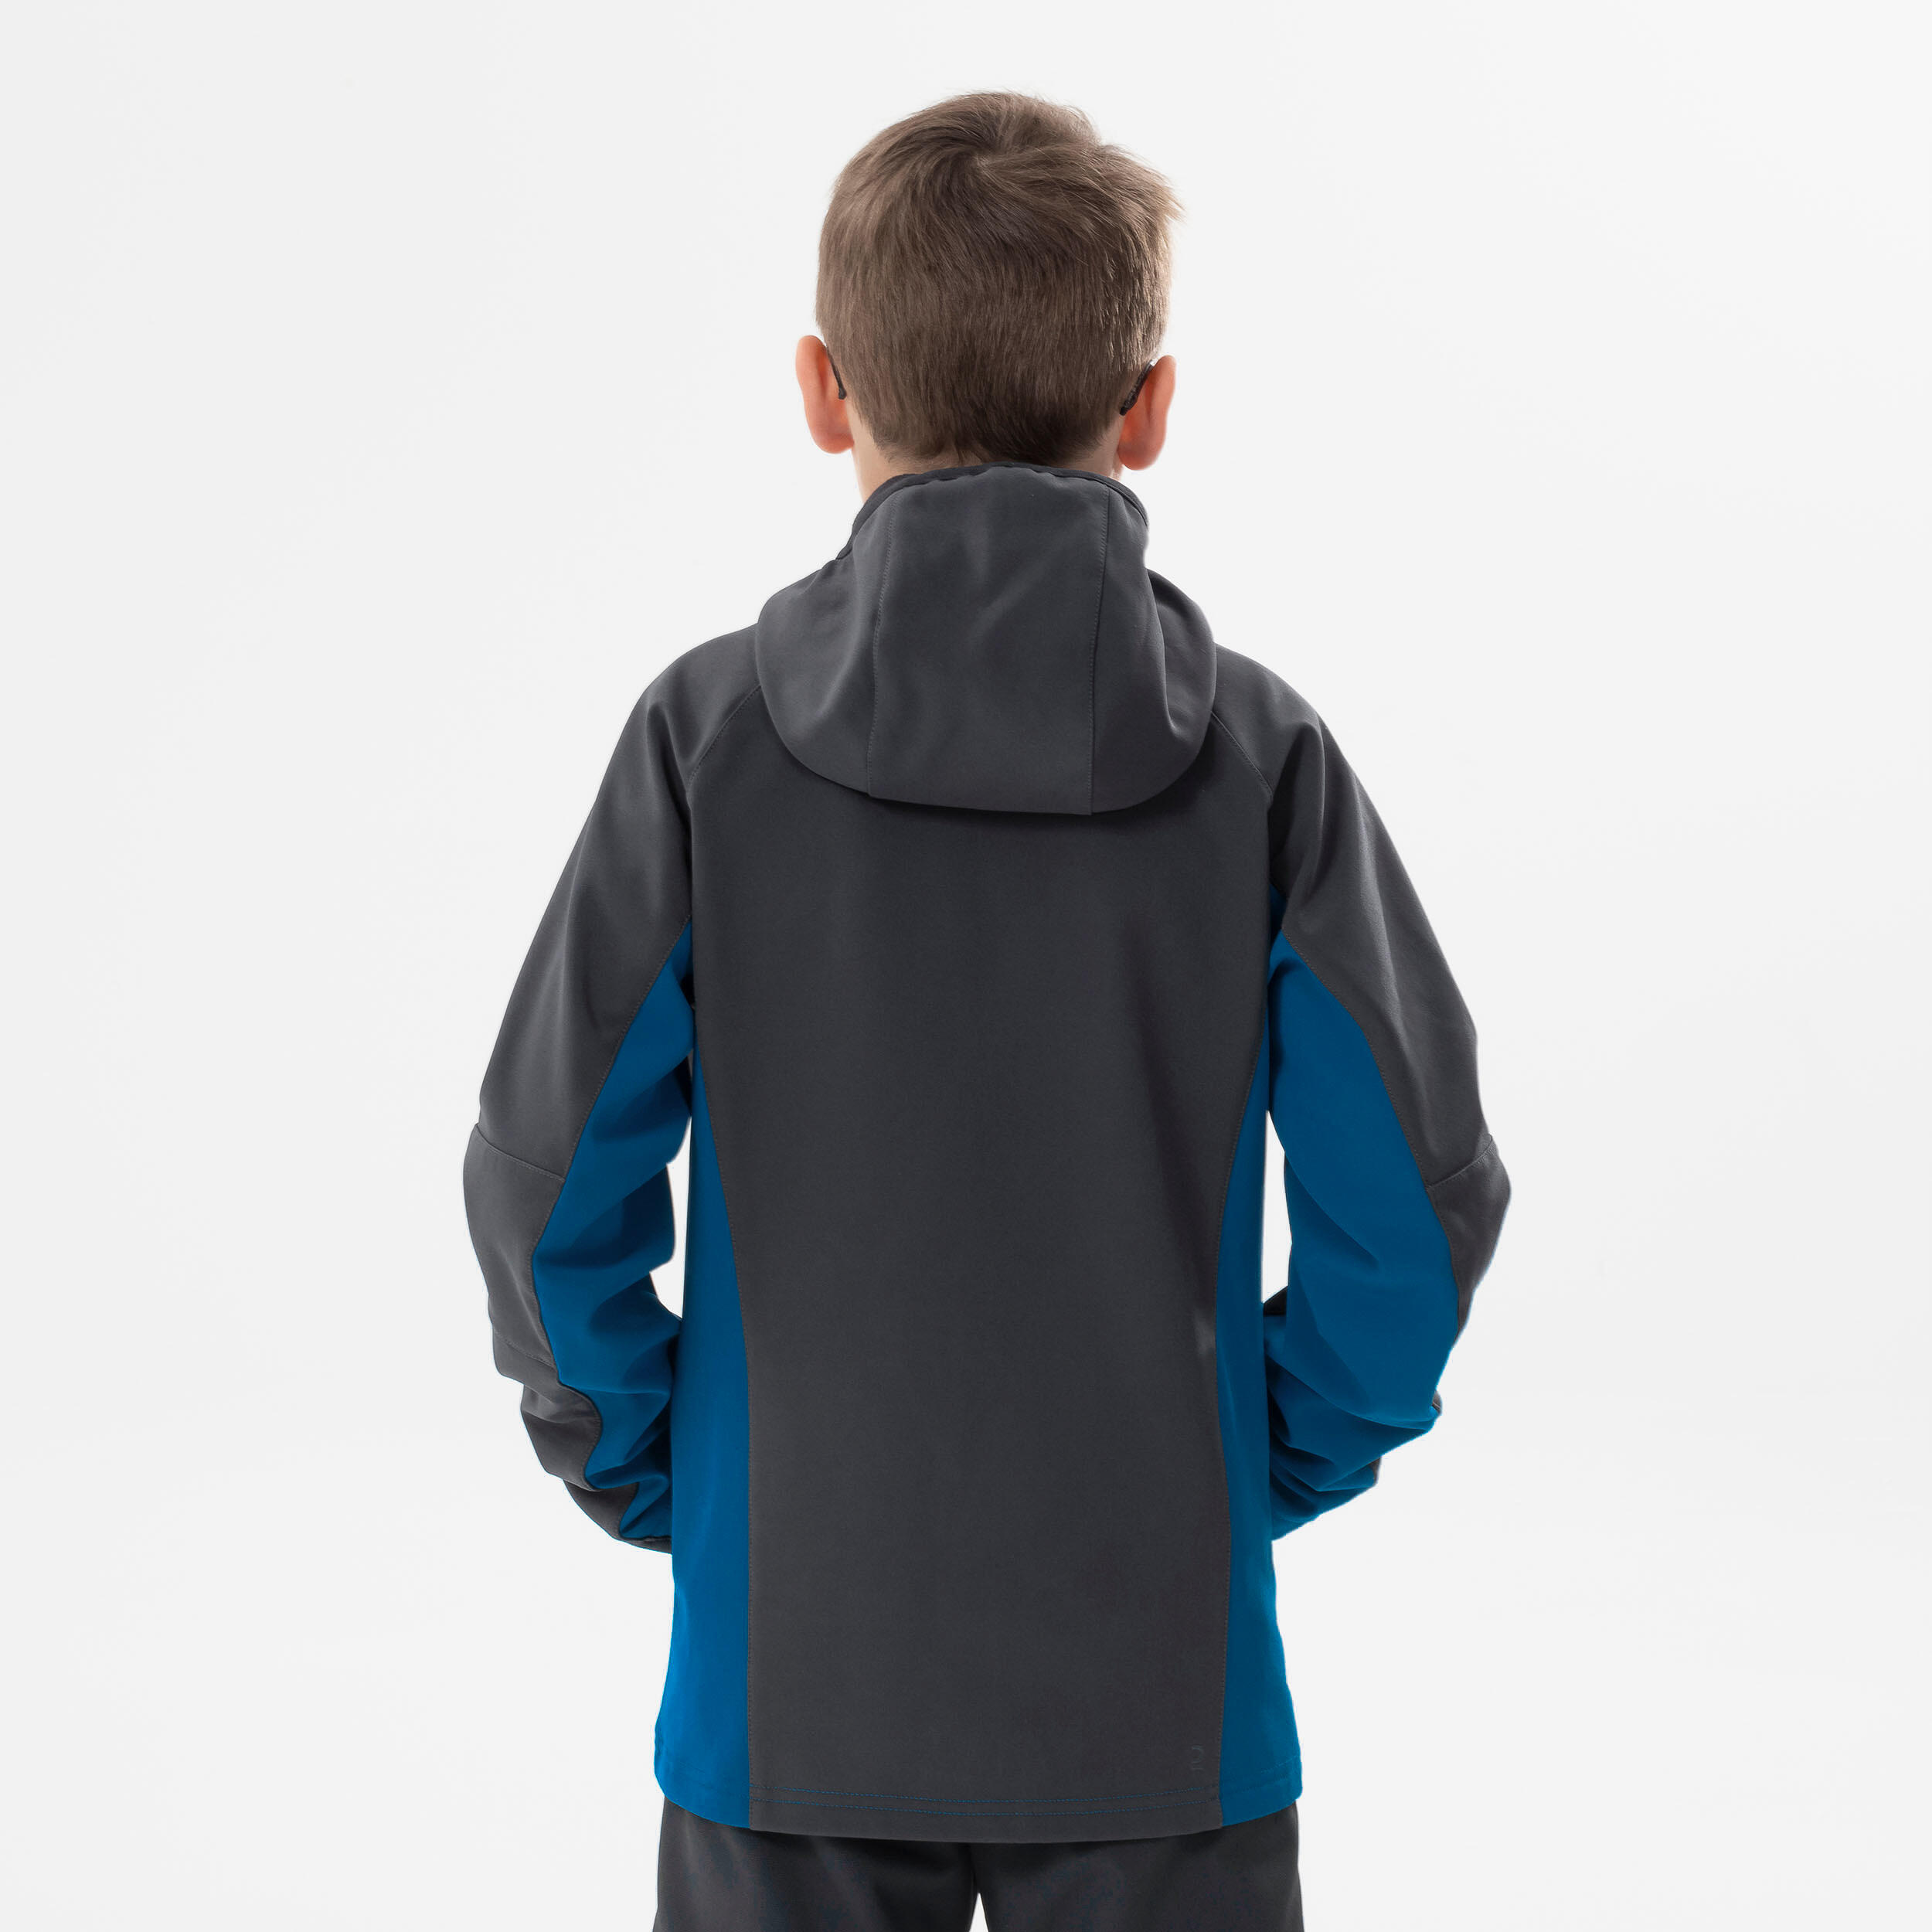 Boys’ Softshell Hiking Jacket Aged 7-15 MH550 - Blue and Grey 5/7